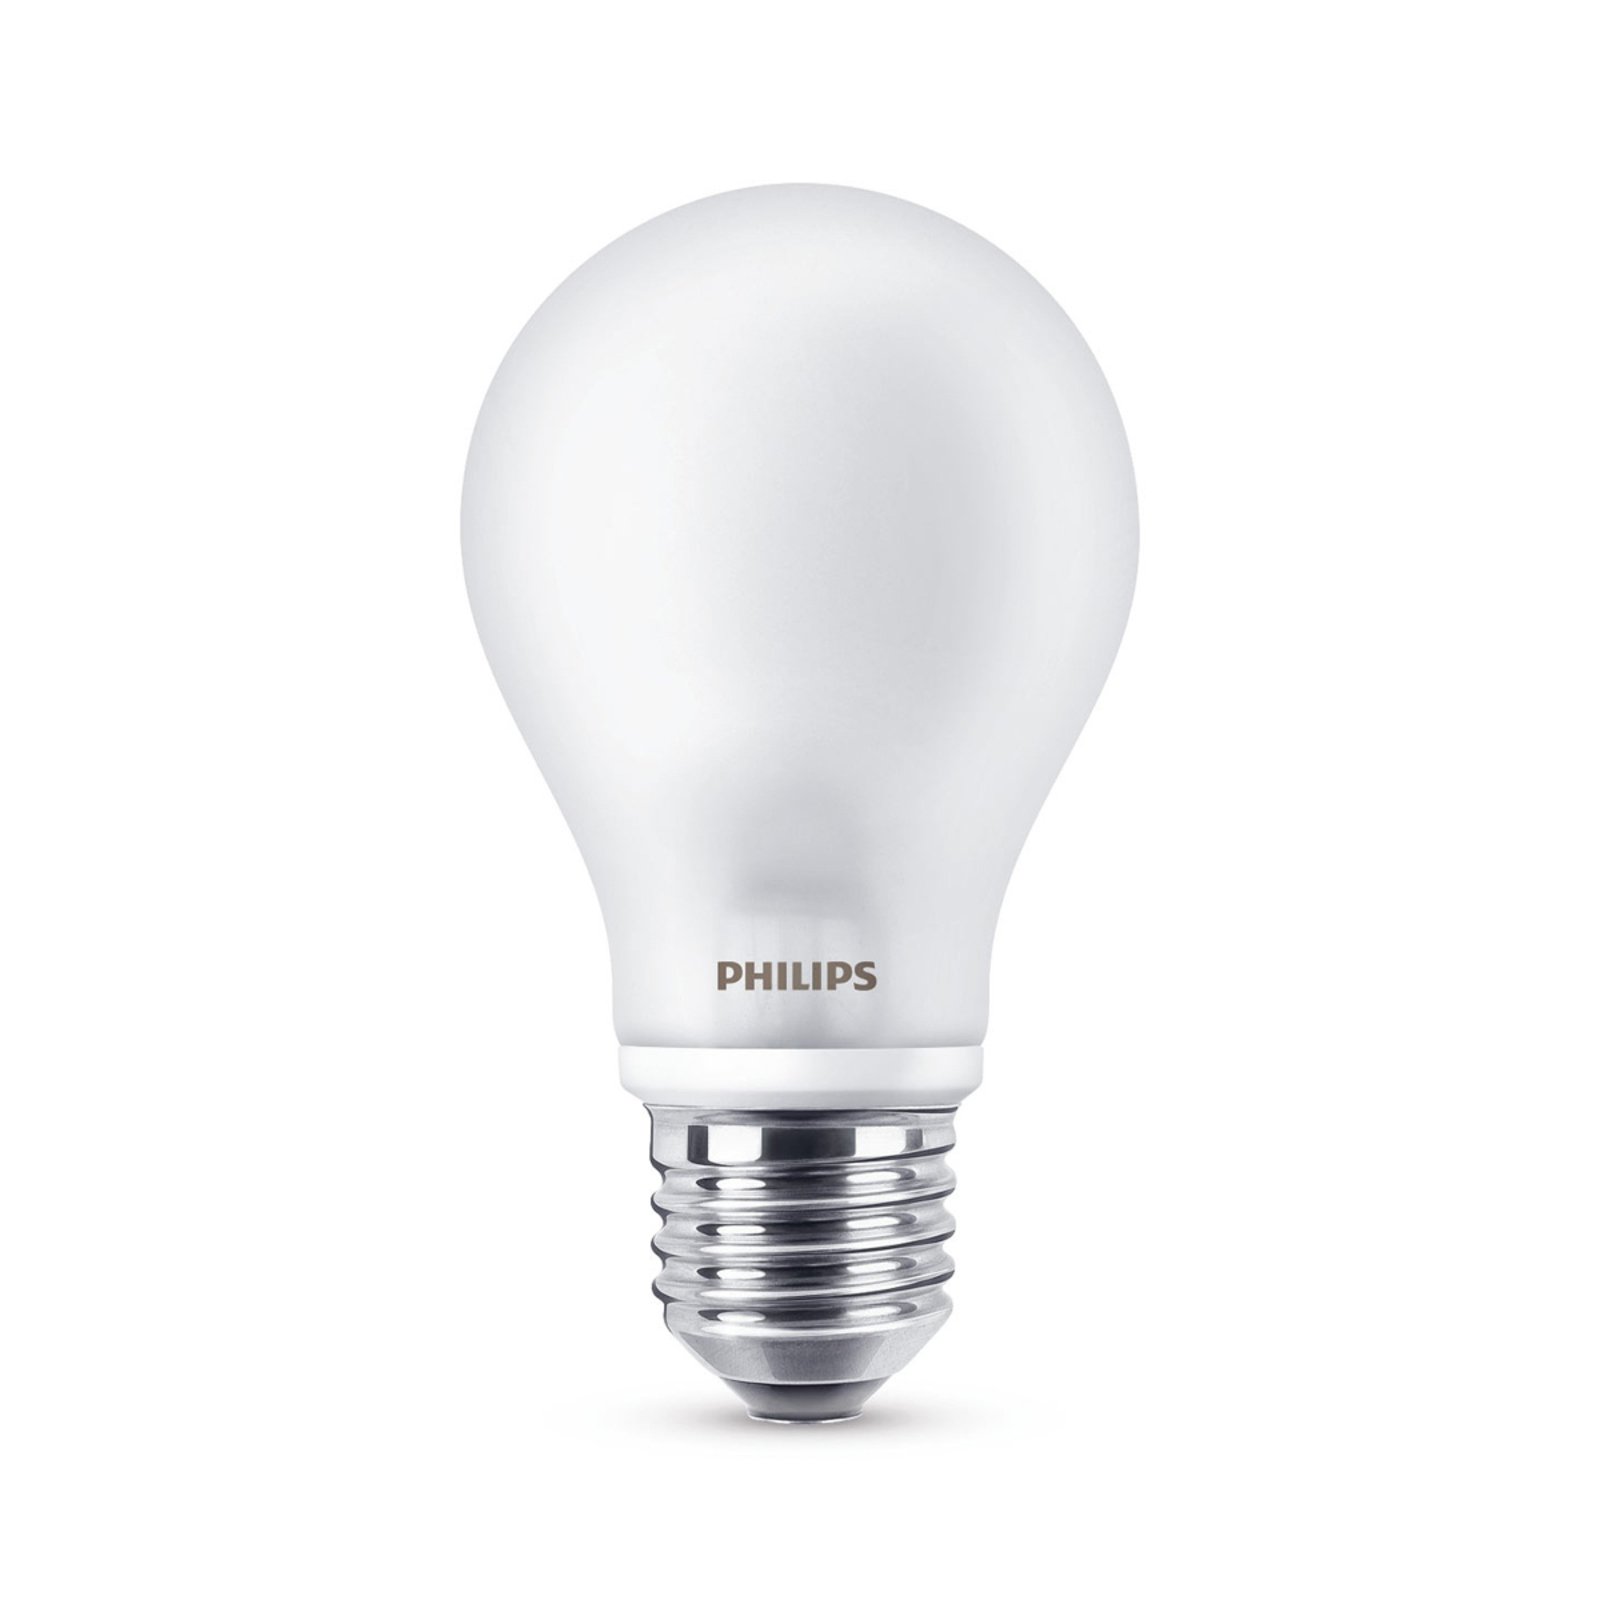 Philips E27 A60 ampoule LED 7 W, 2 700 K, mate